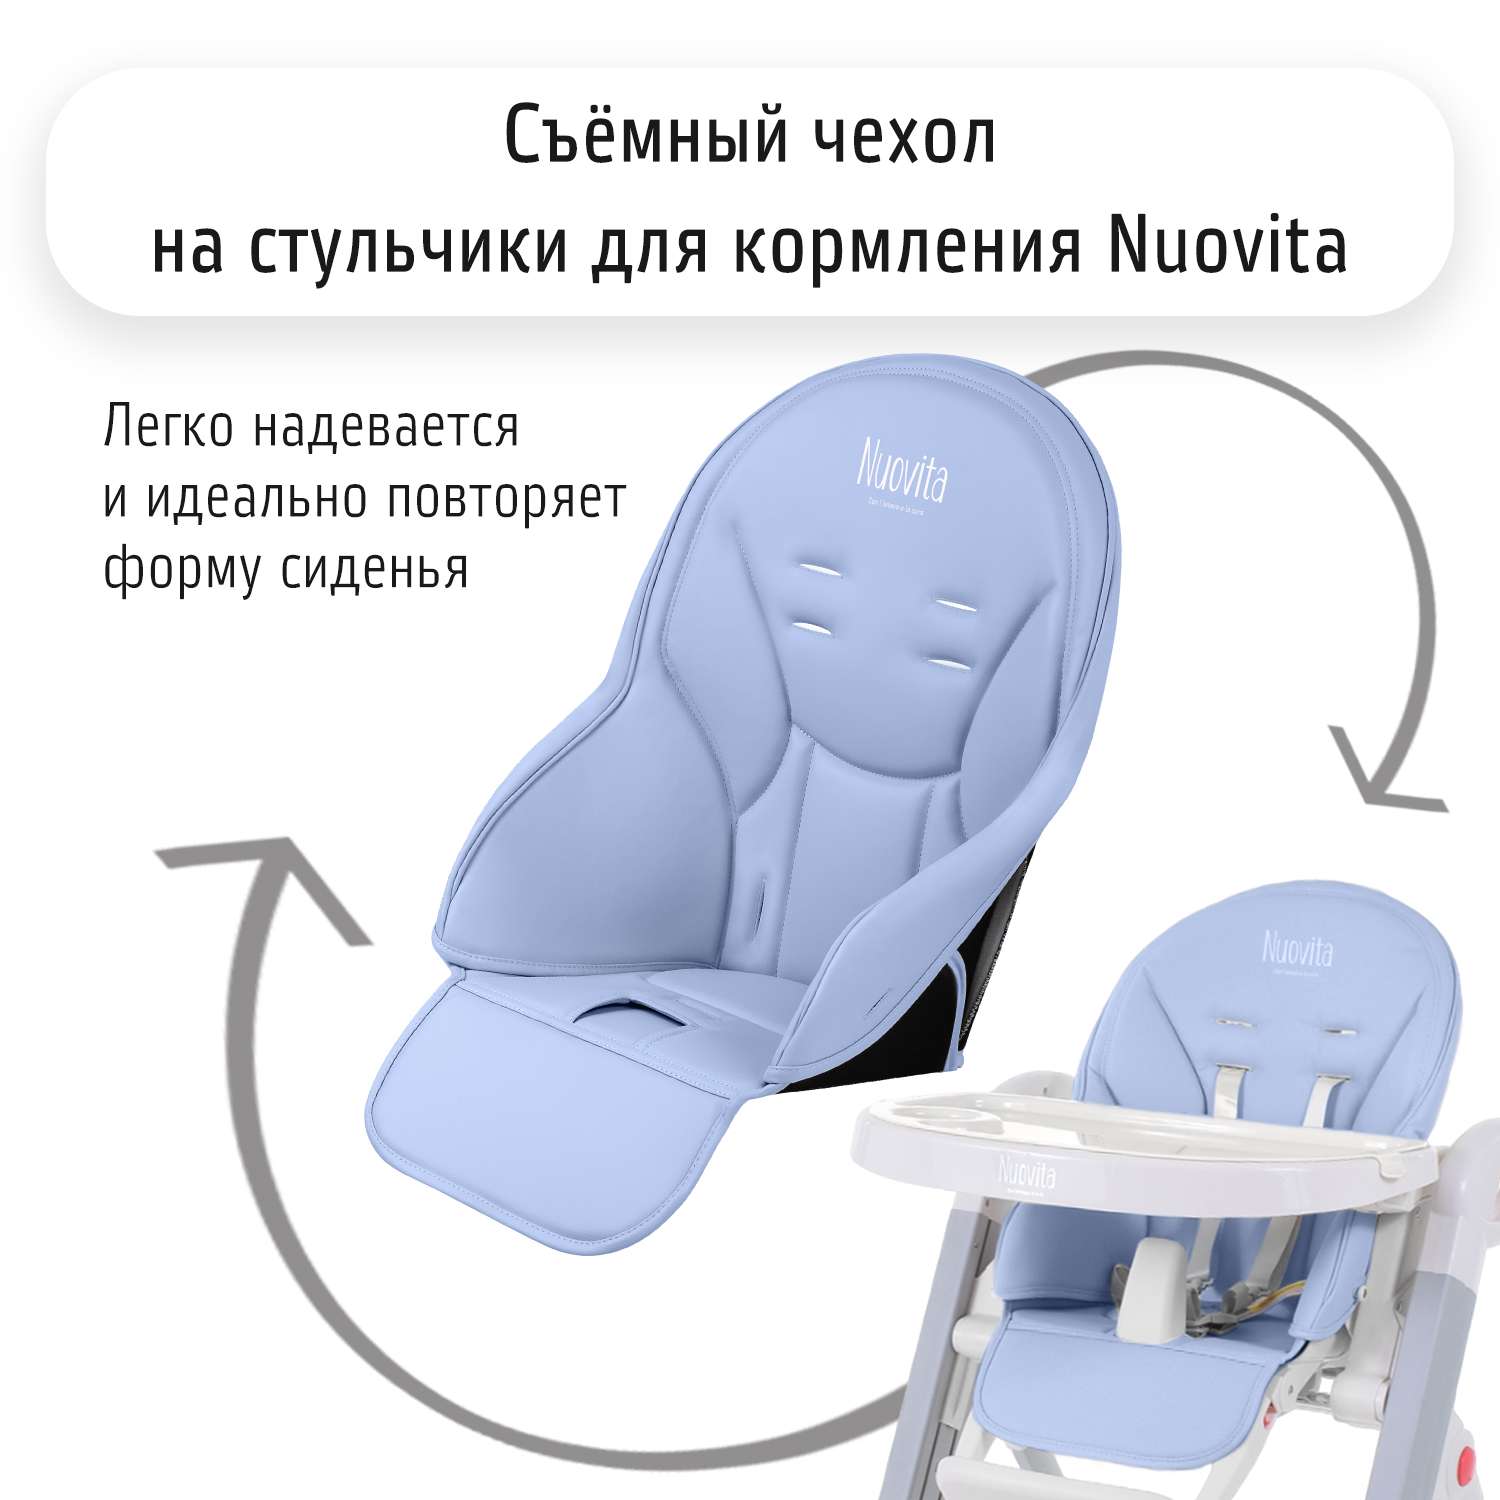 Чехол на стульчик Nuovita для кормления голубой - фото 1